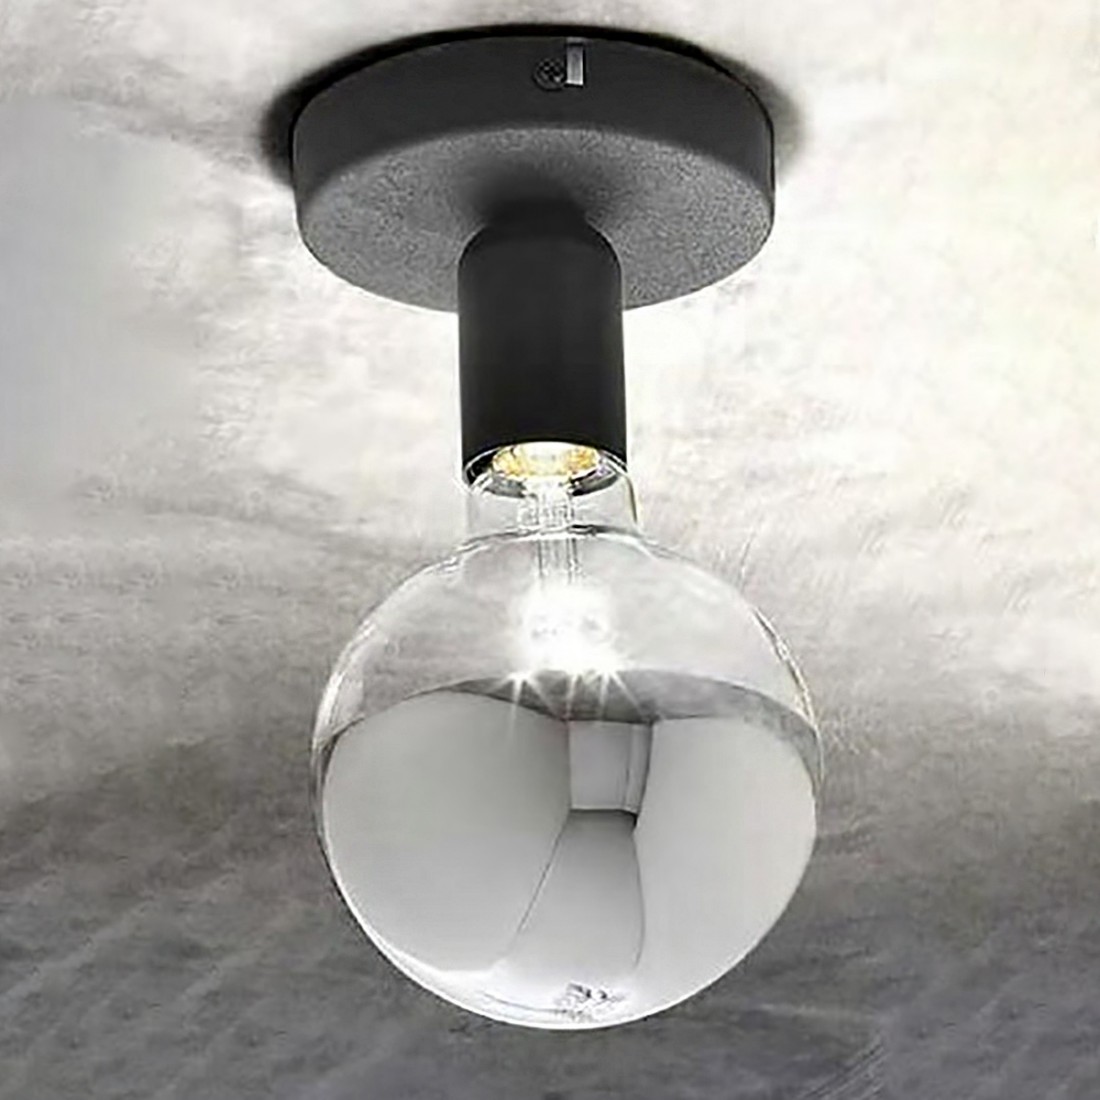 Lampada a LED sfera con cupola colorata - E27